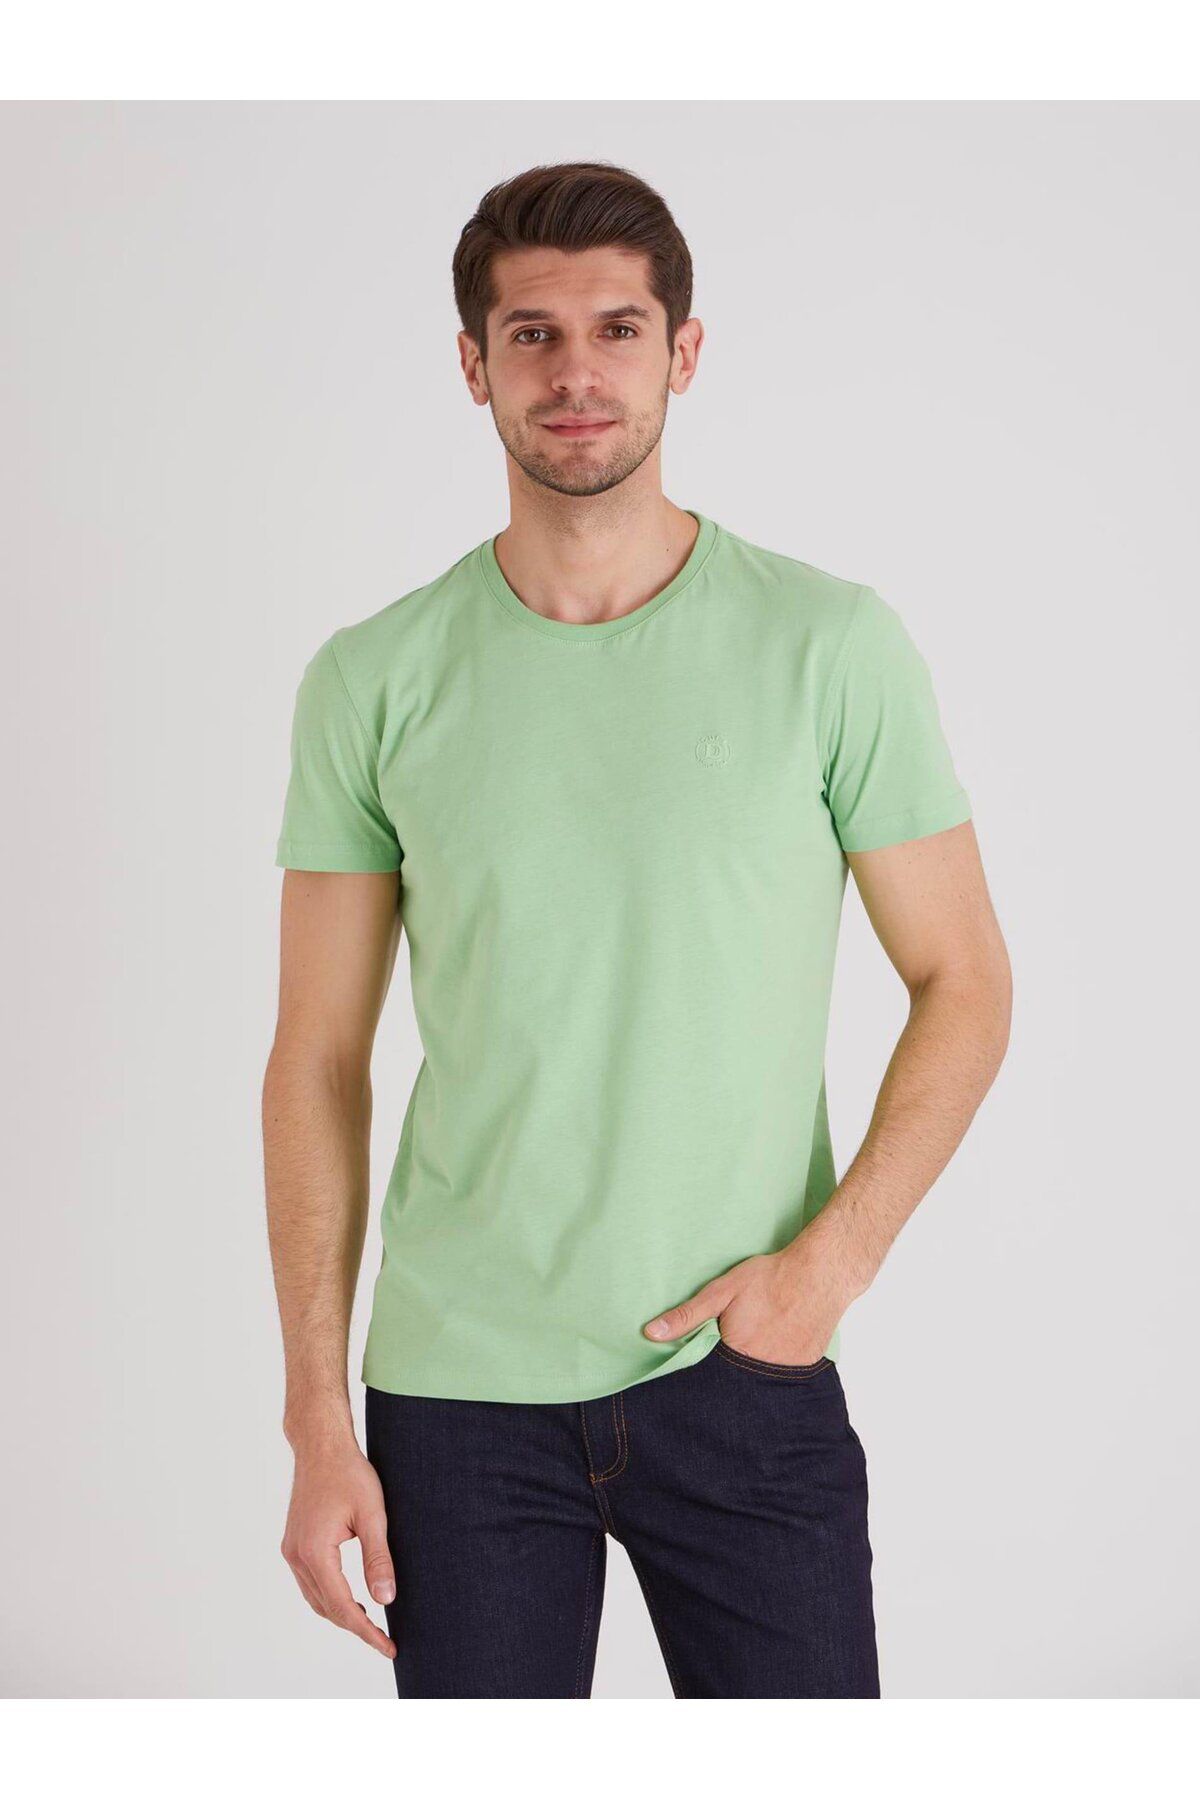 Dufy Yeşil Erkek Slim Fit Baskılı Bisiklet Yaka Tshirt - 63010